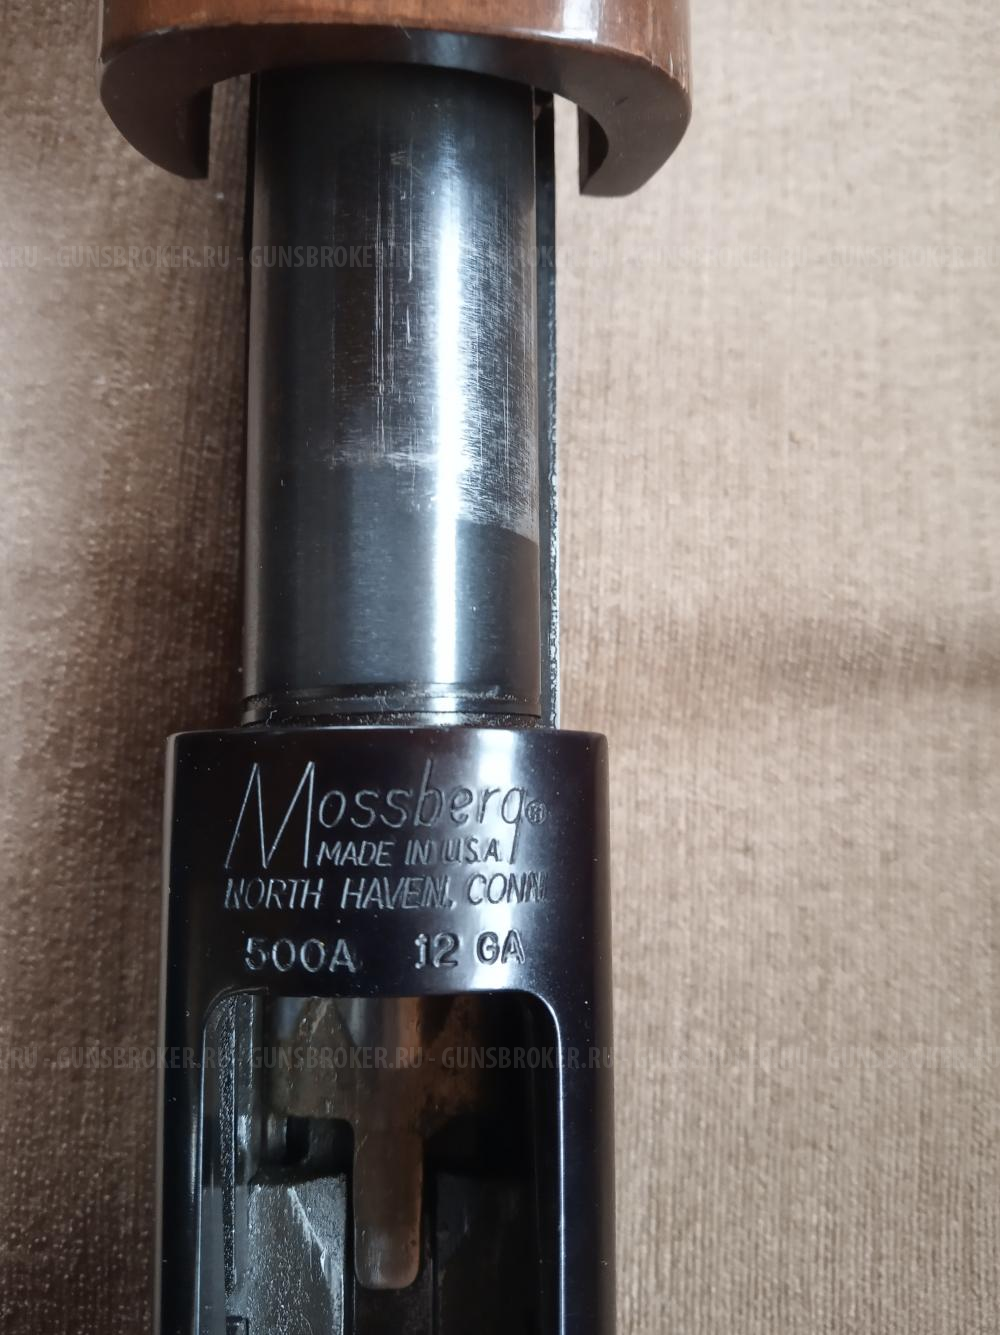 Mossberg 500 A 